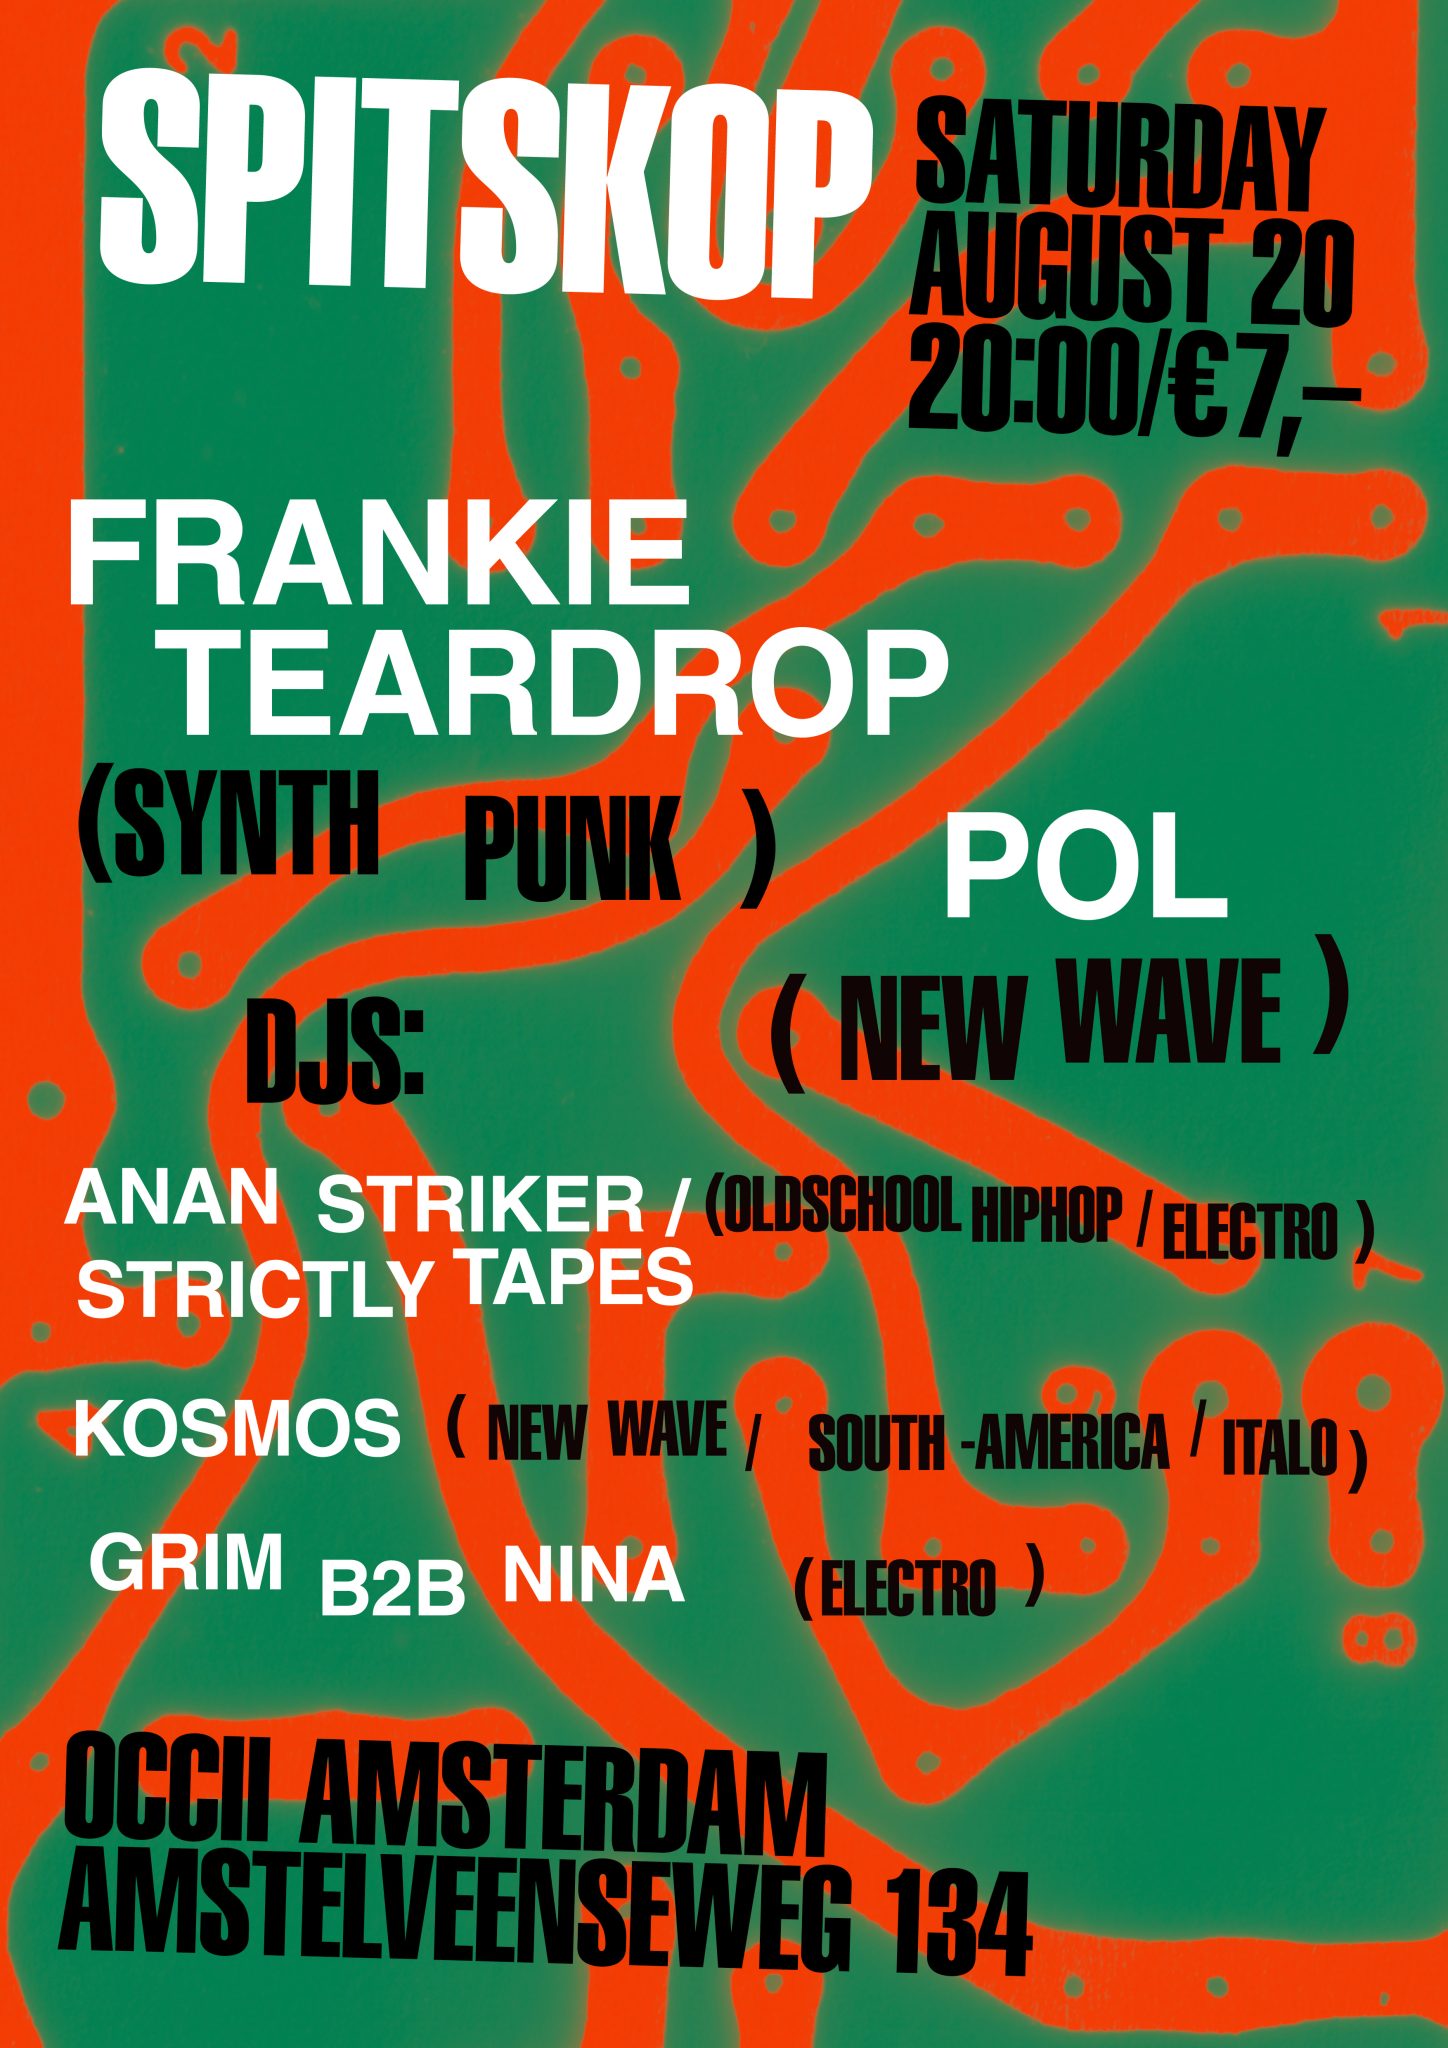 POL + FRANKIE TEARDROP + DJ's: ANANSTRIKER/STRICKTLY TAPES + KOSMOS + Grim b2b Nina